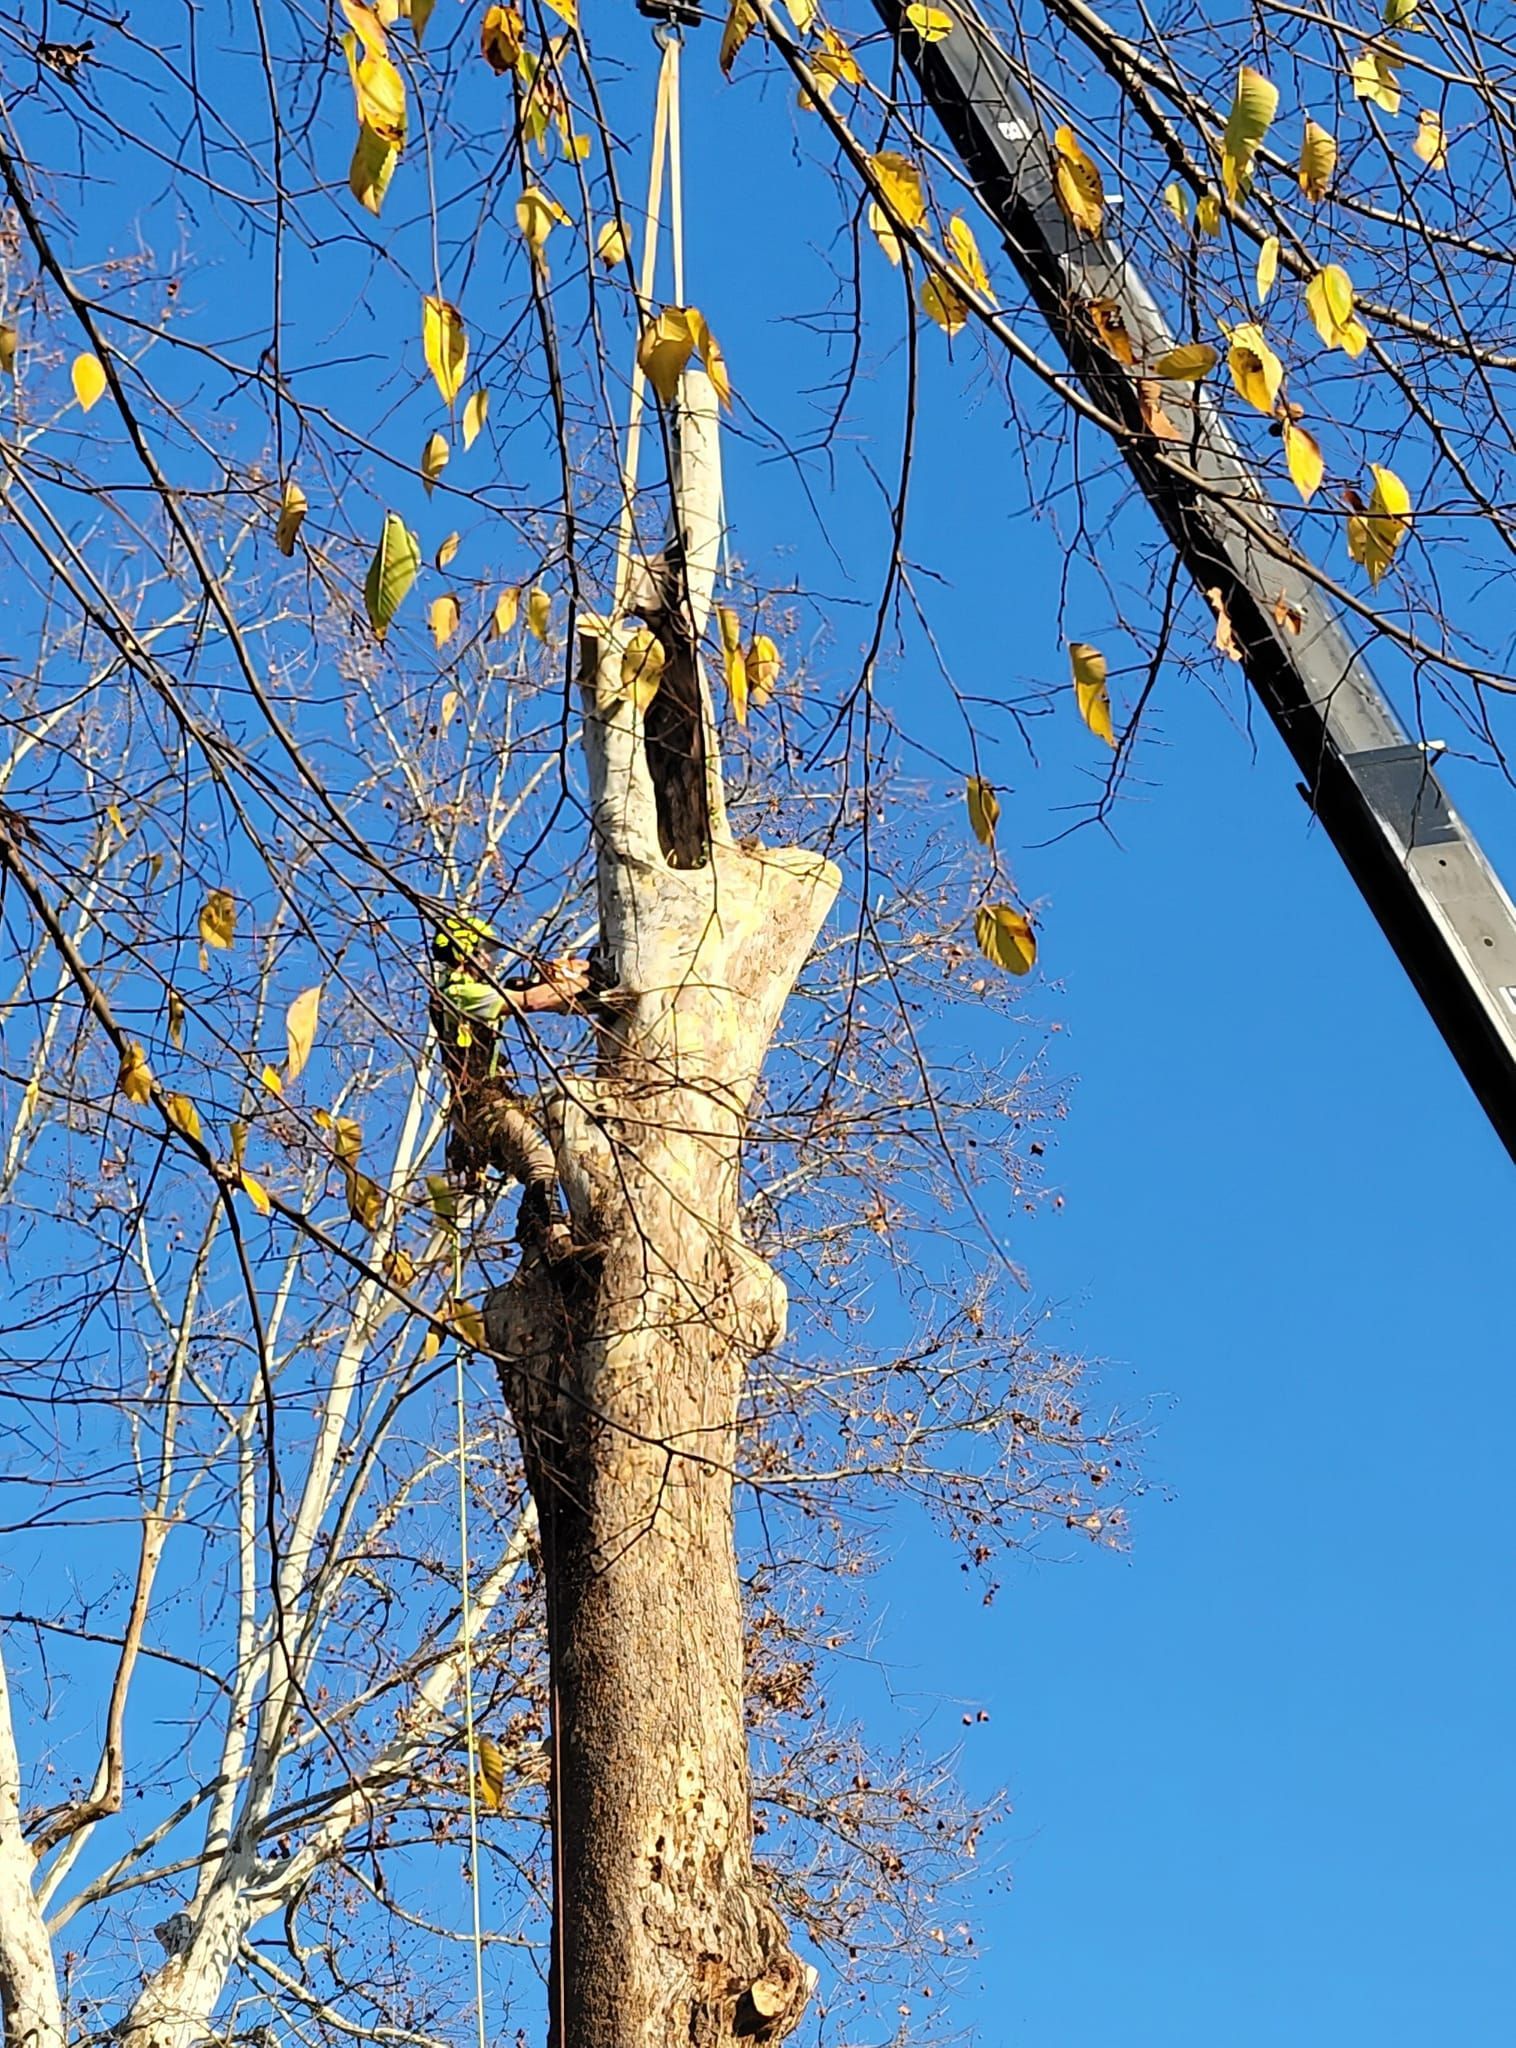 arborist cutting the treetop